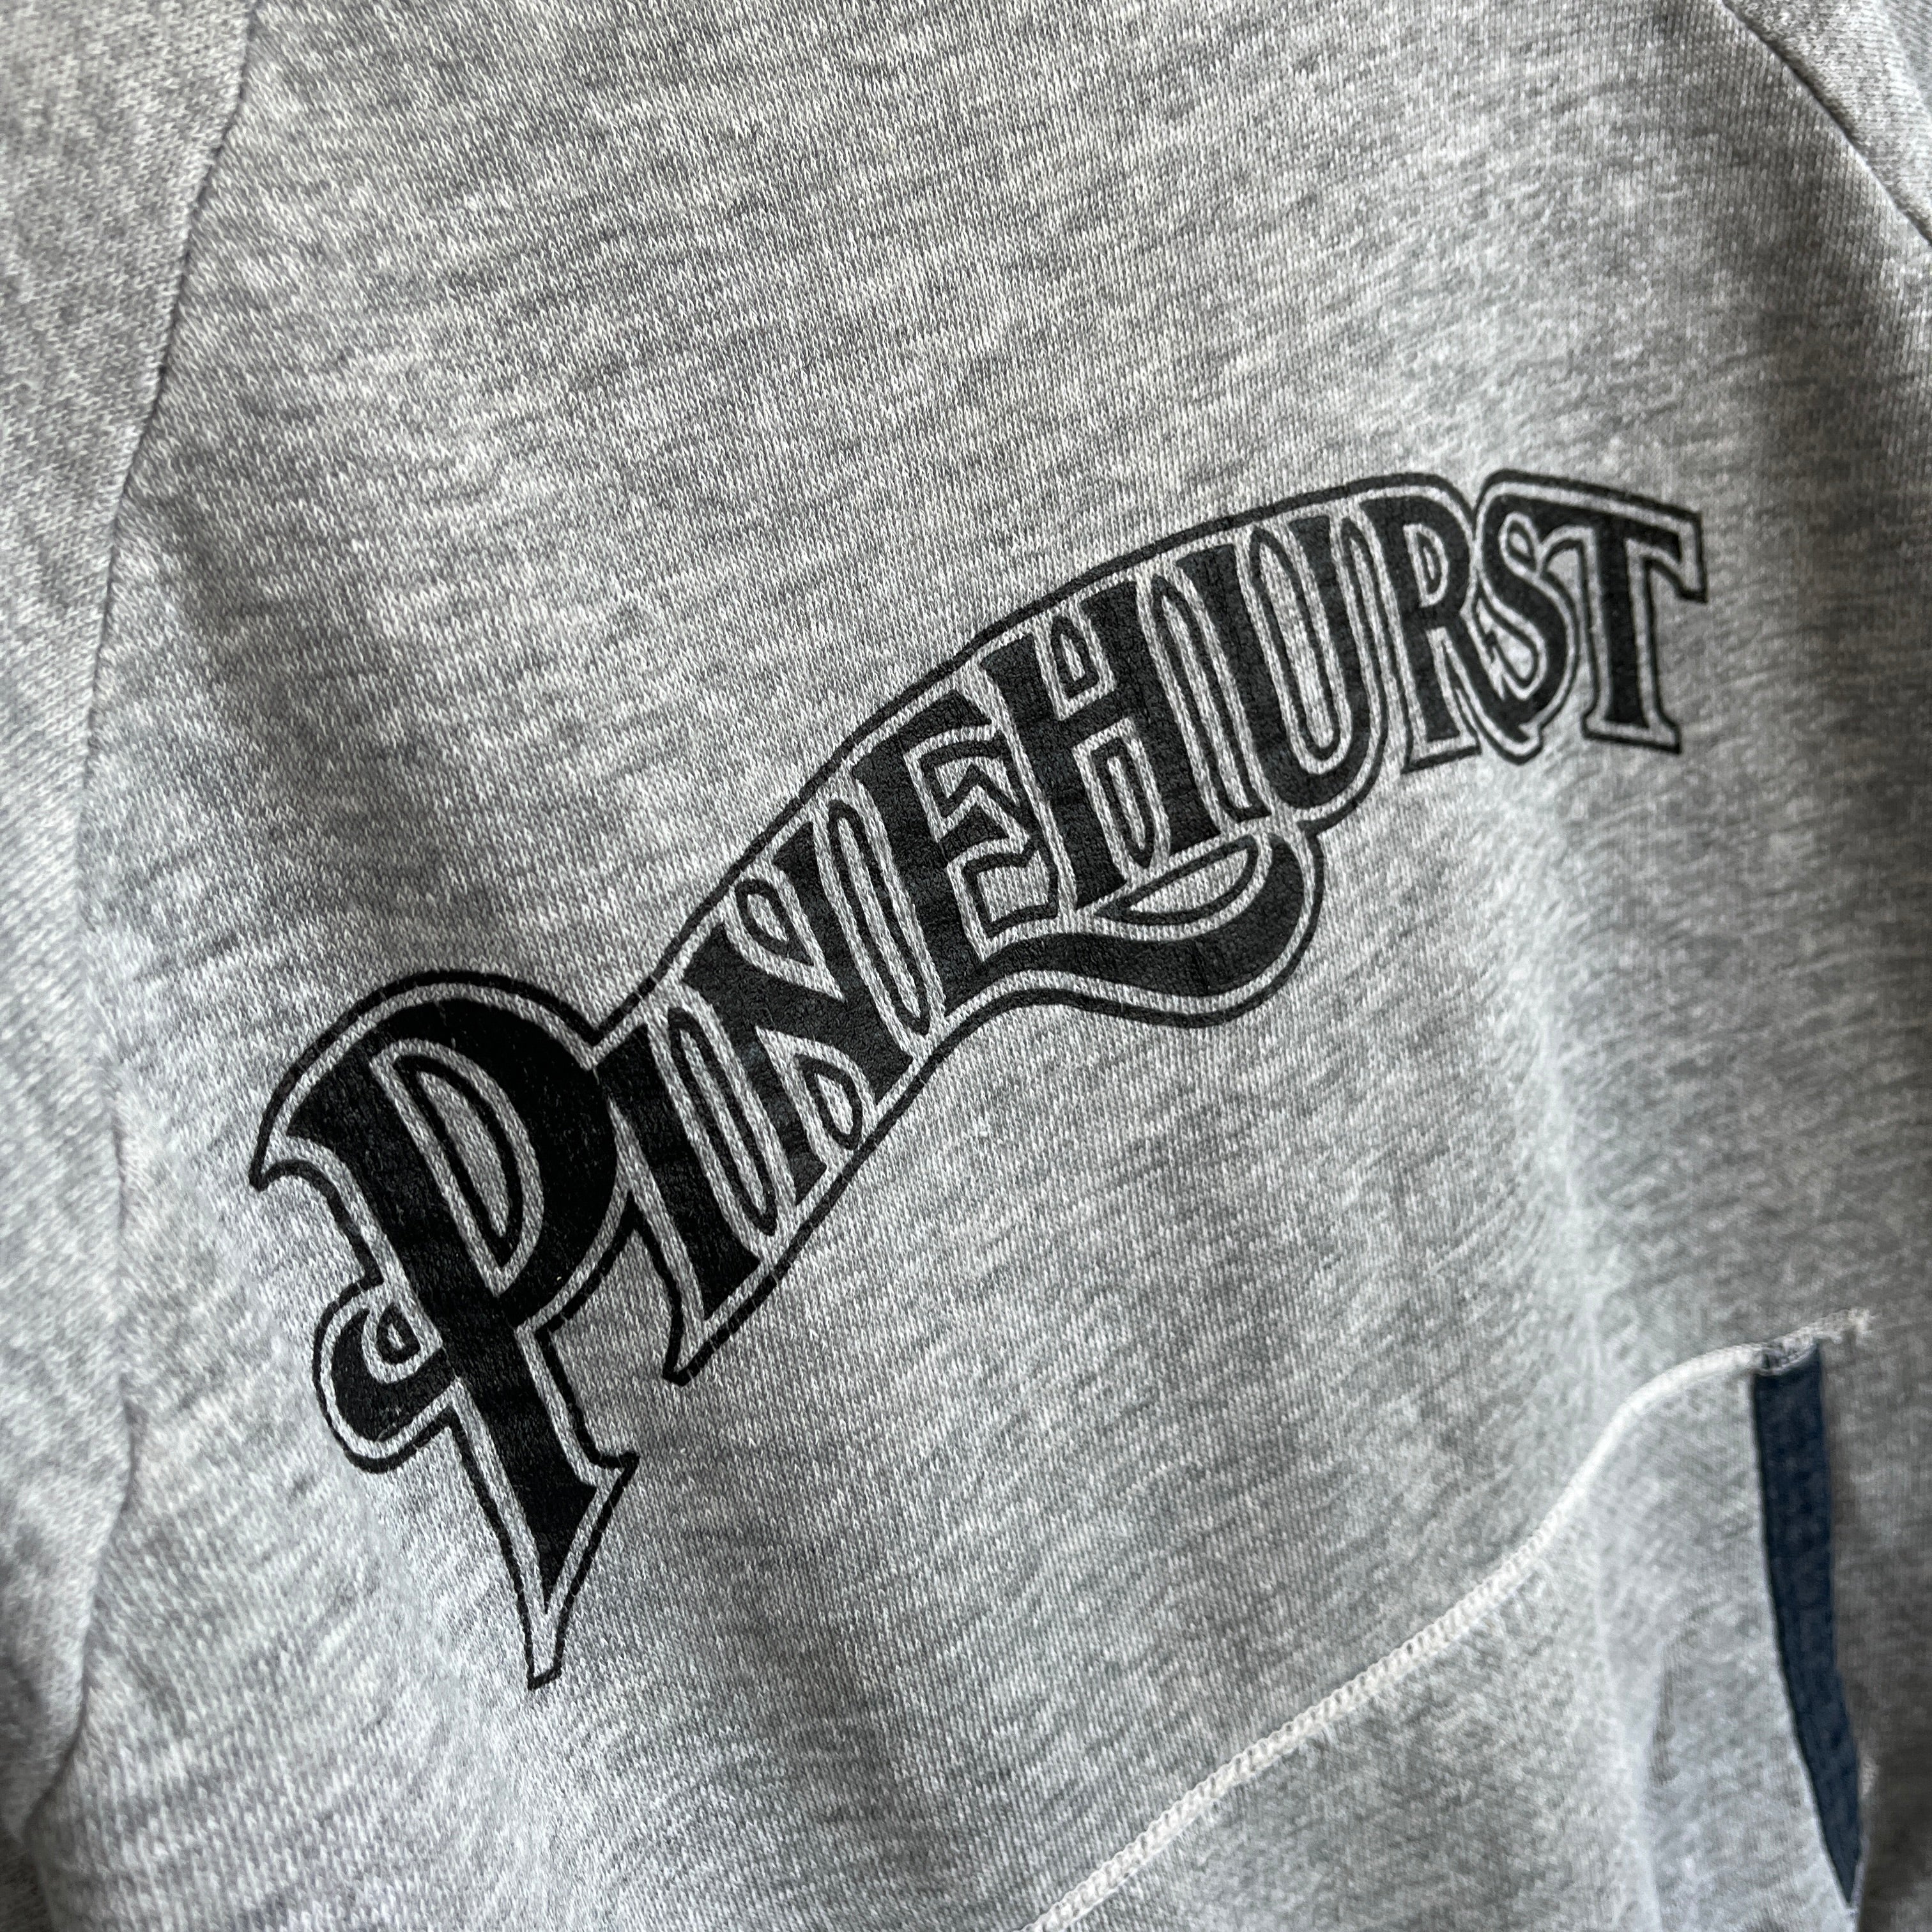 1970s Pinehurst Golf Club Sweatshirt by Velva Sheen!